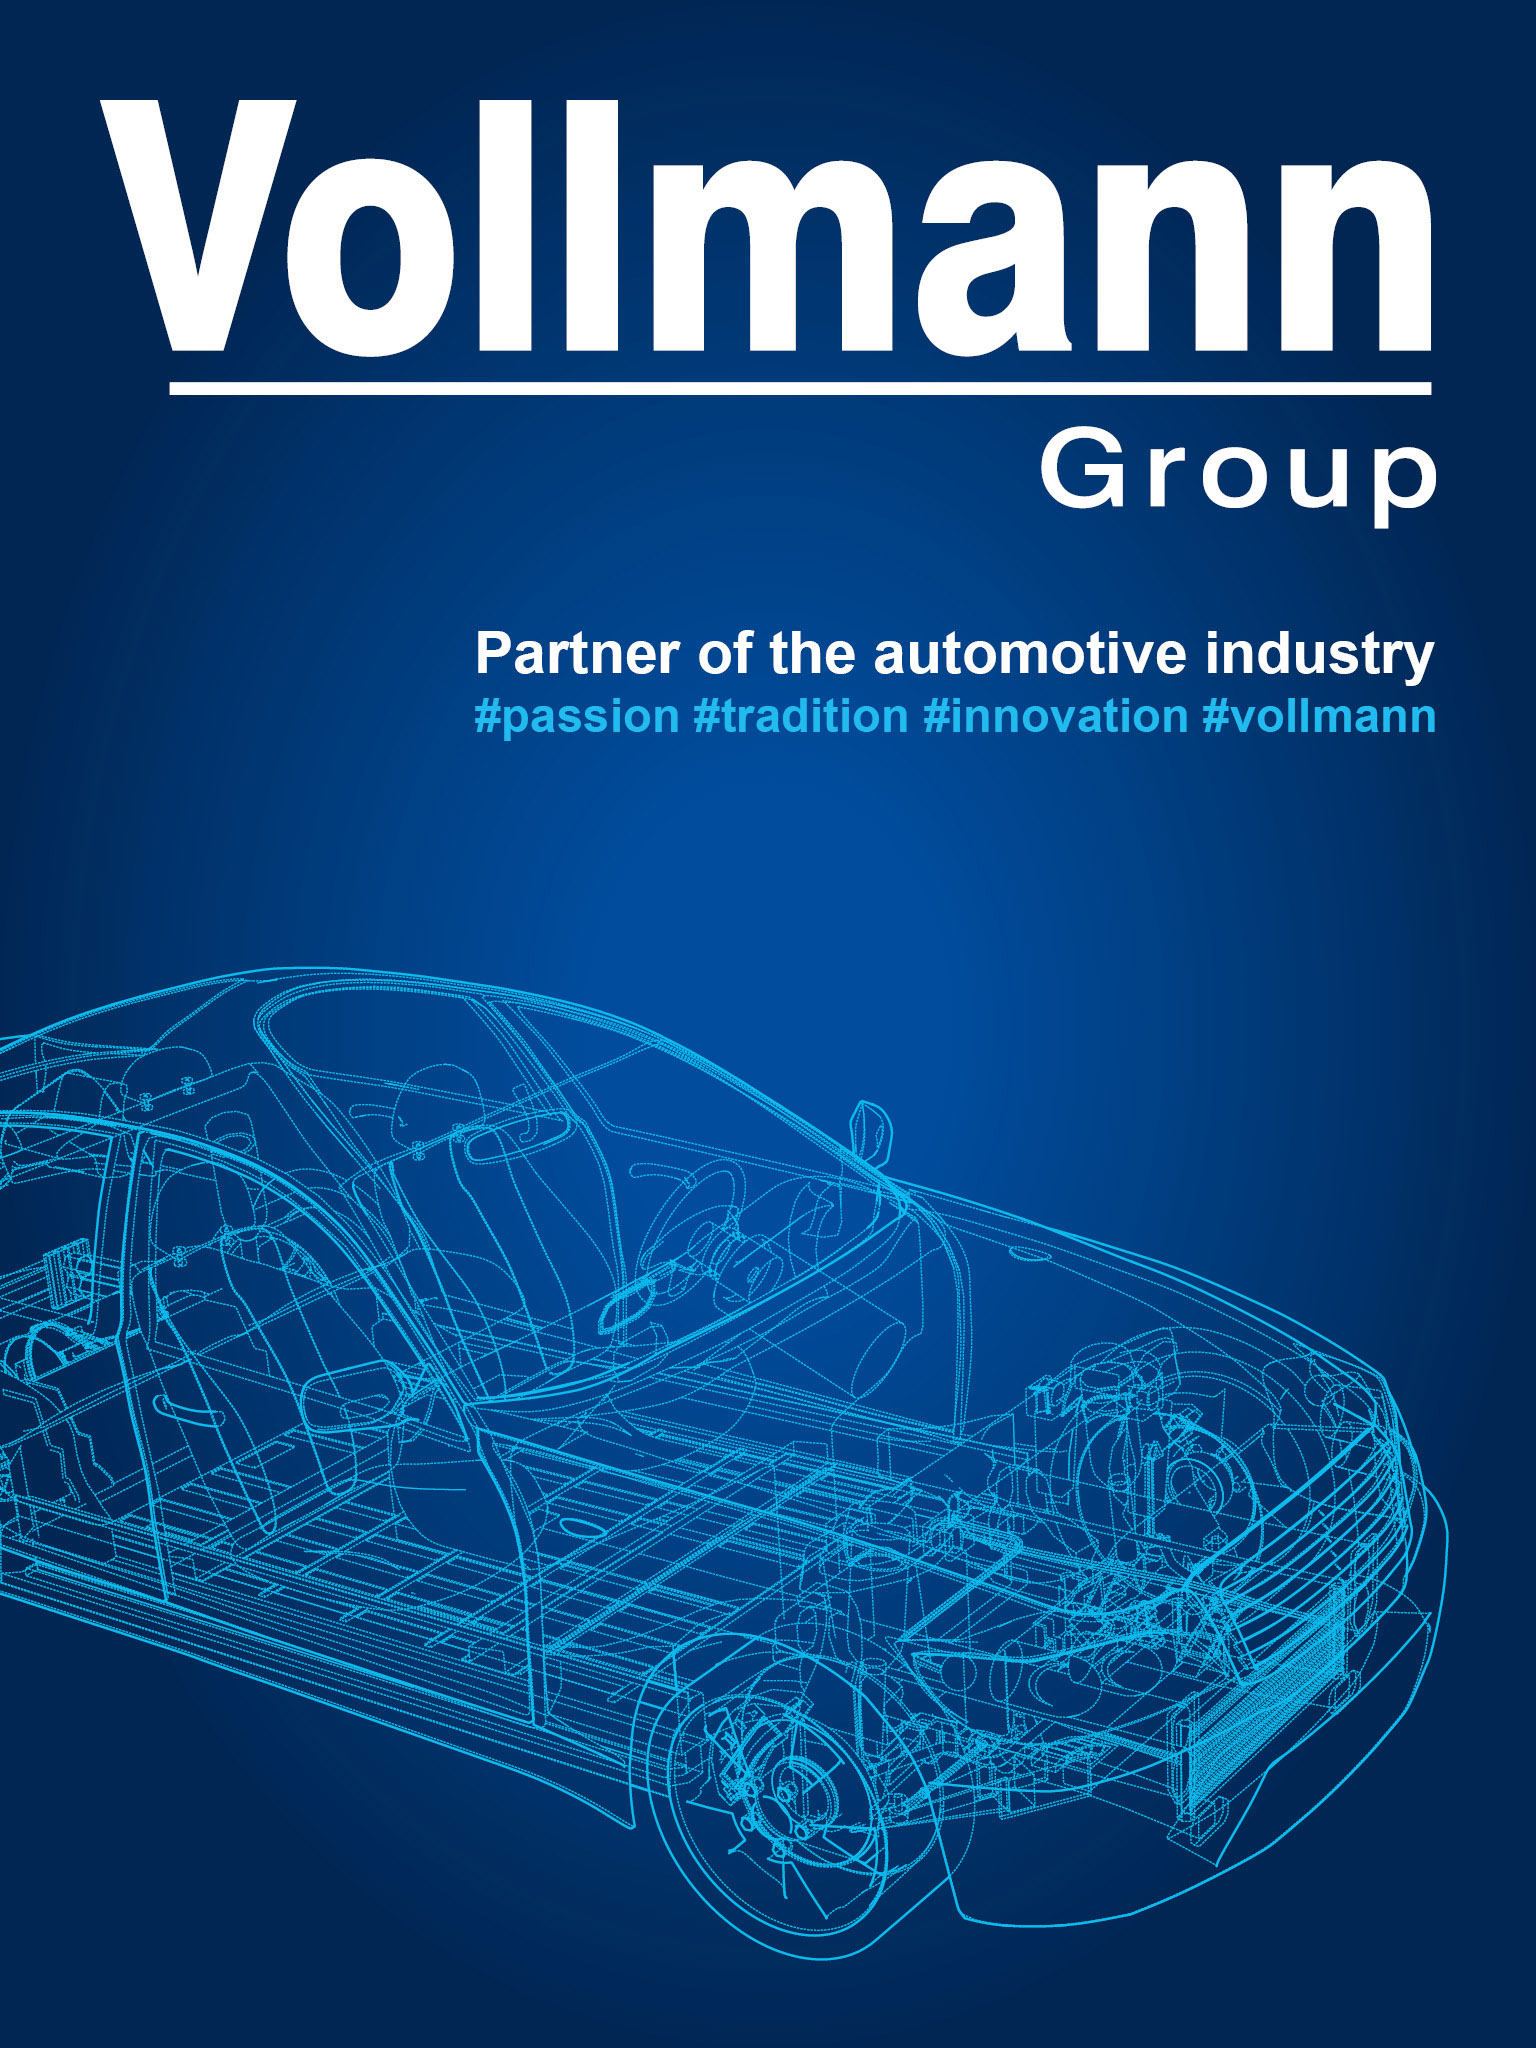 Vollmann Group